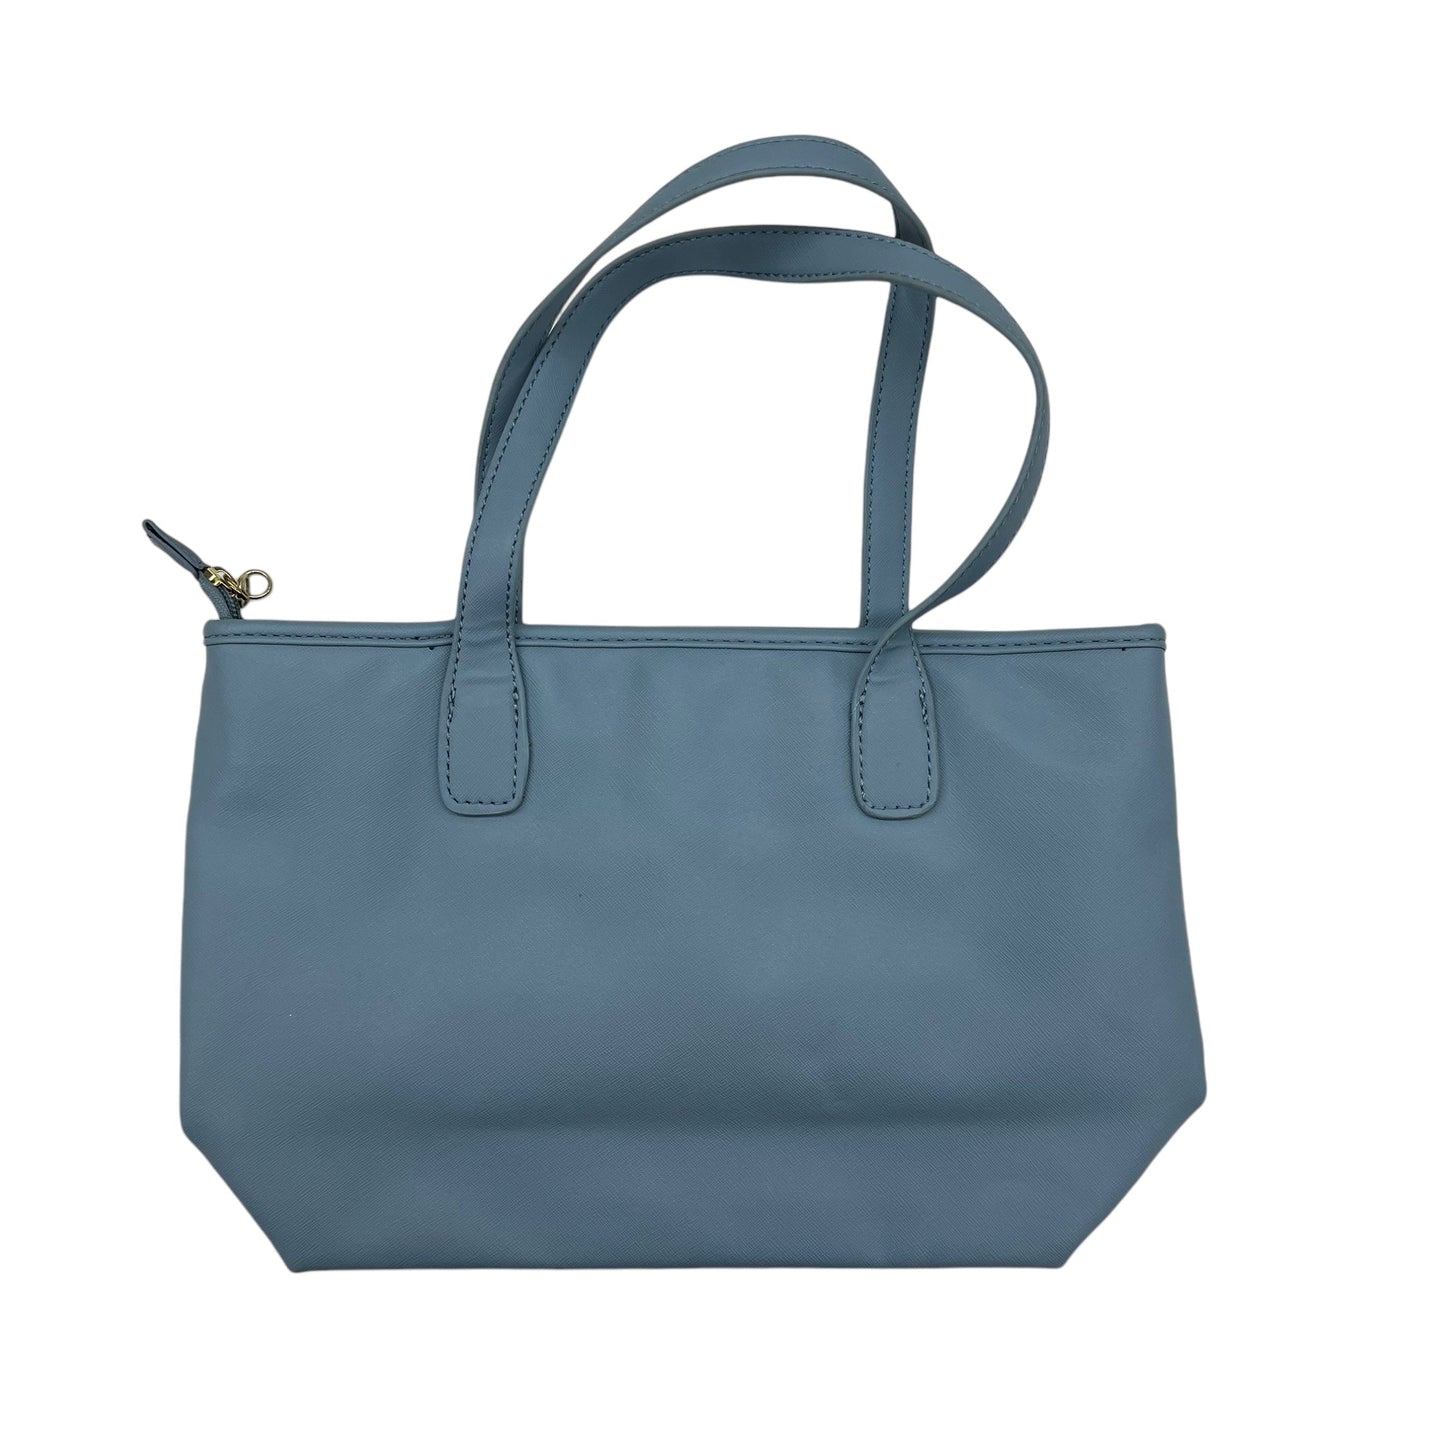 Handbag By Marc Fisher  Size: Medium